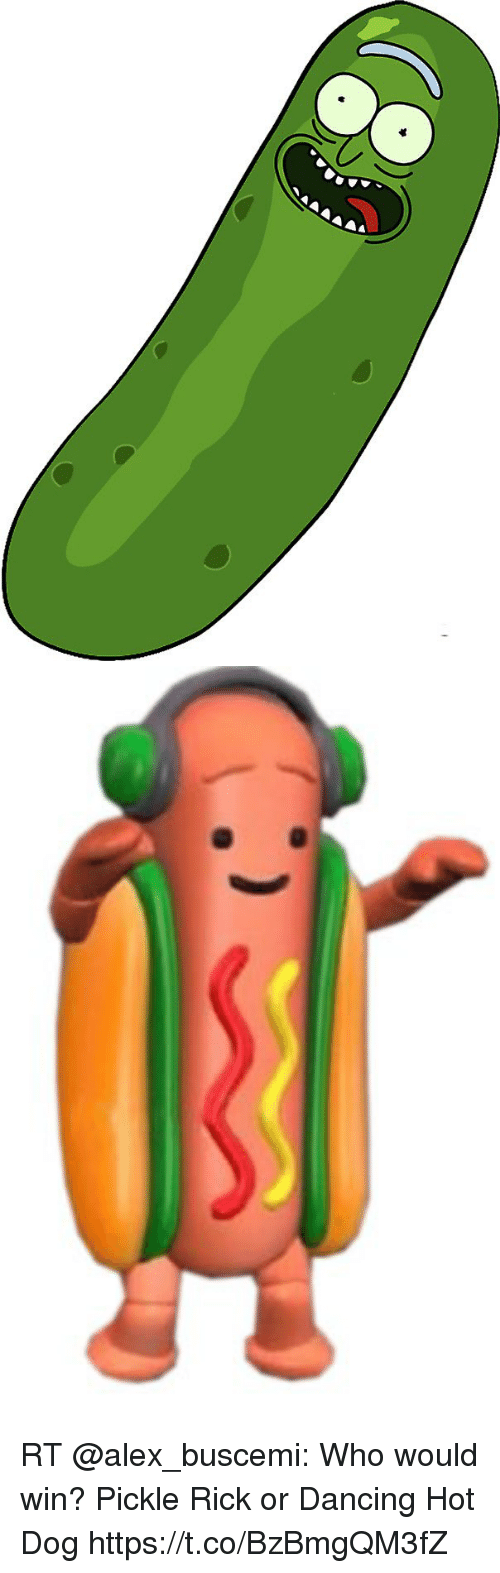 The S. reccomend dancing hotdog meme snapchat full